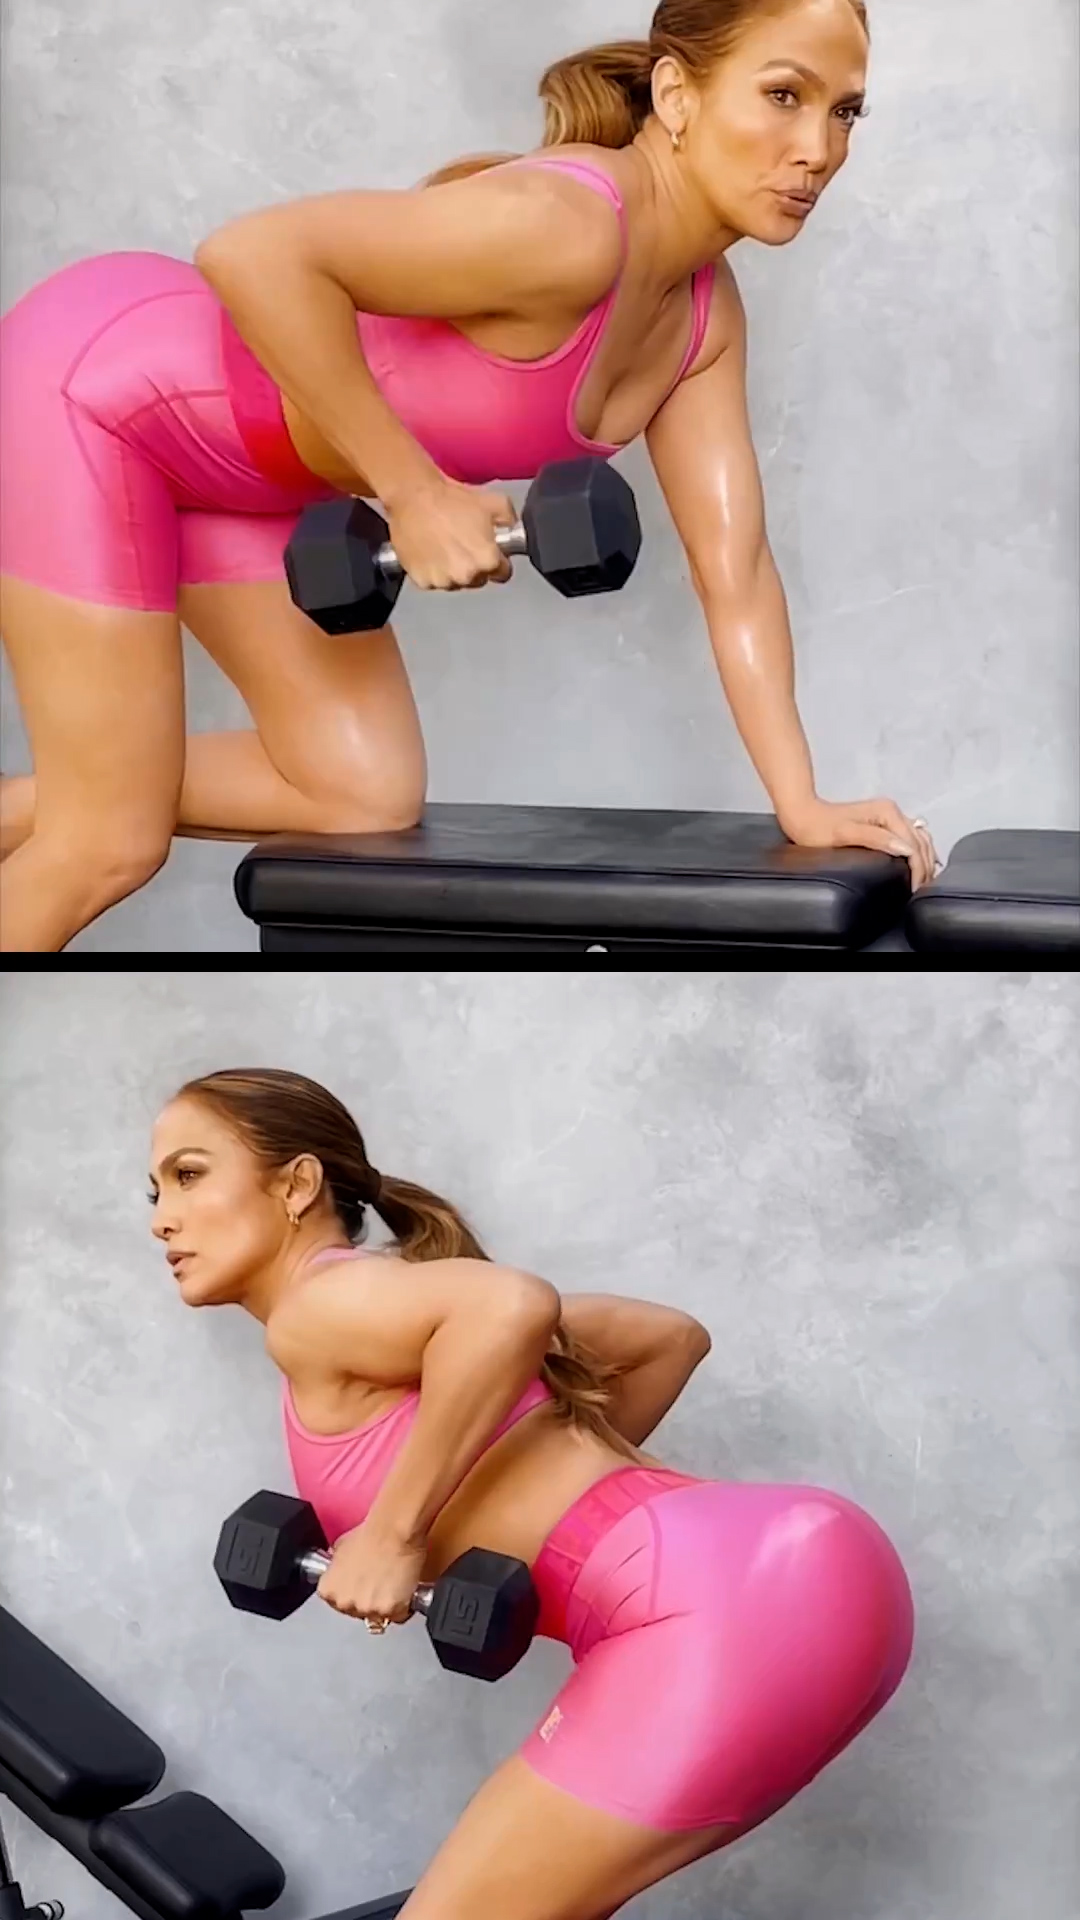 Fotos n°4 : Jennifer Lopez se pone en forma!